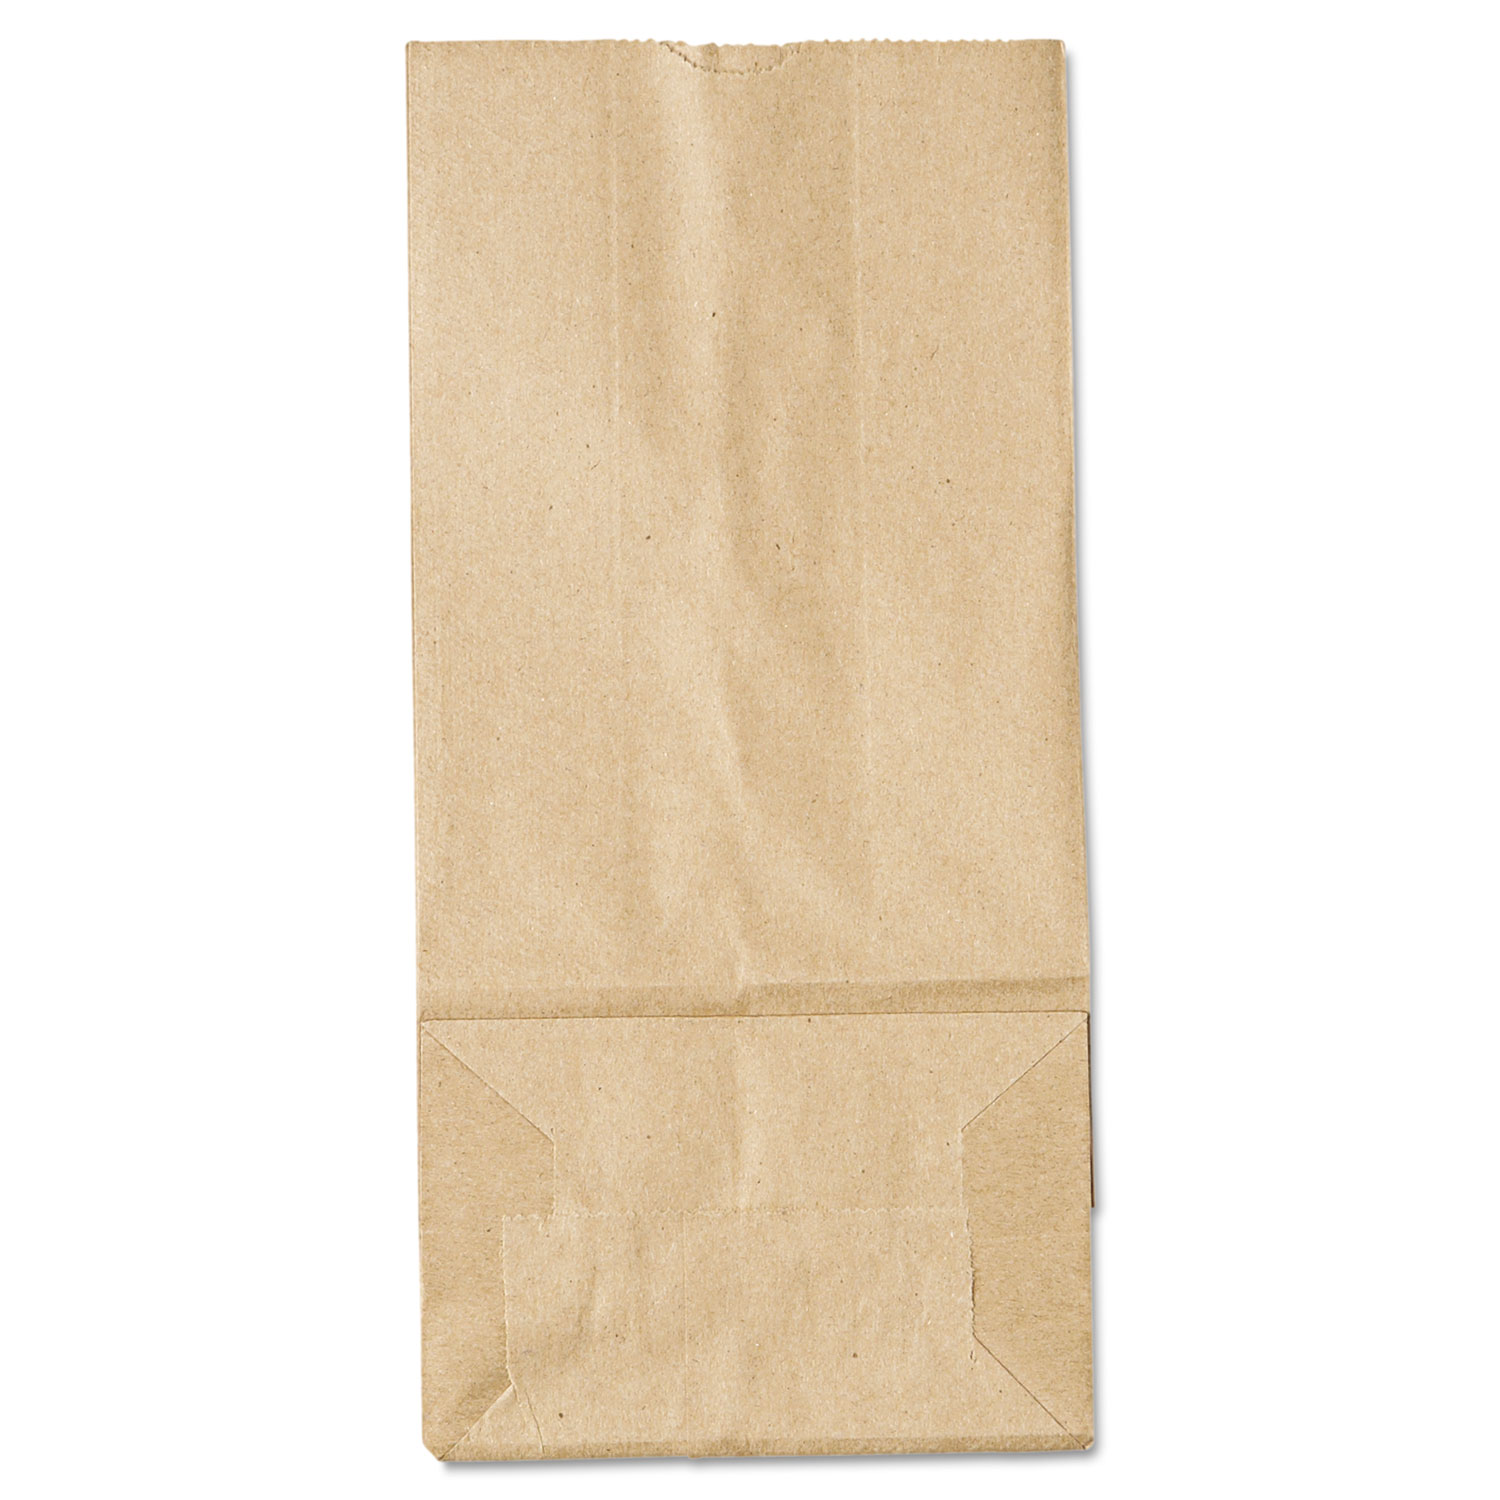 #5 Paper Grocery Bag, 35lb Kraft, Standard 5 1/4 x 3 7/16 x 10 15/16, 500 bags